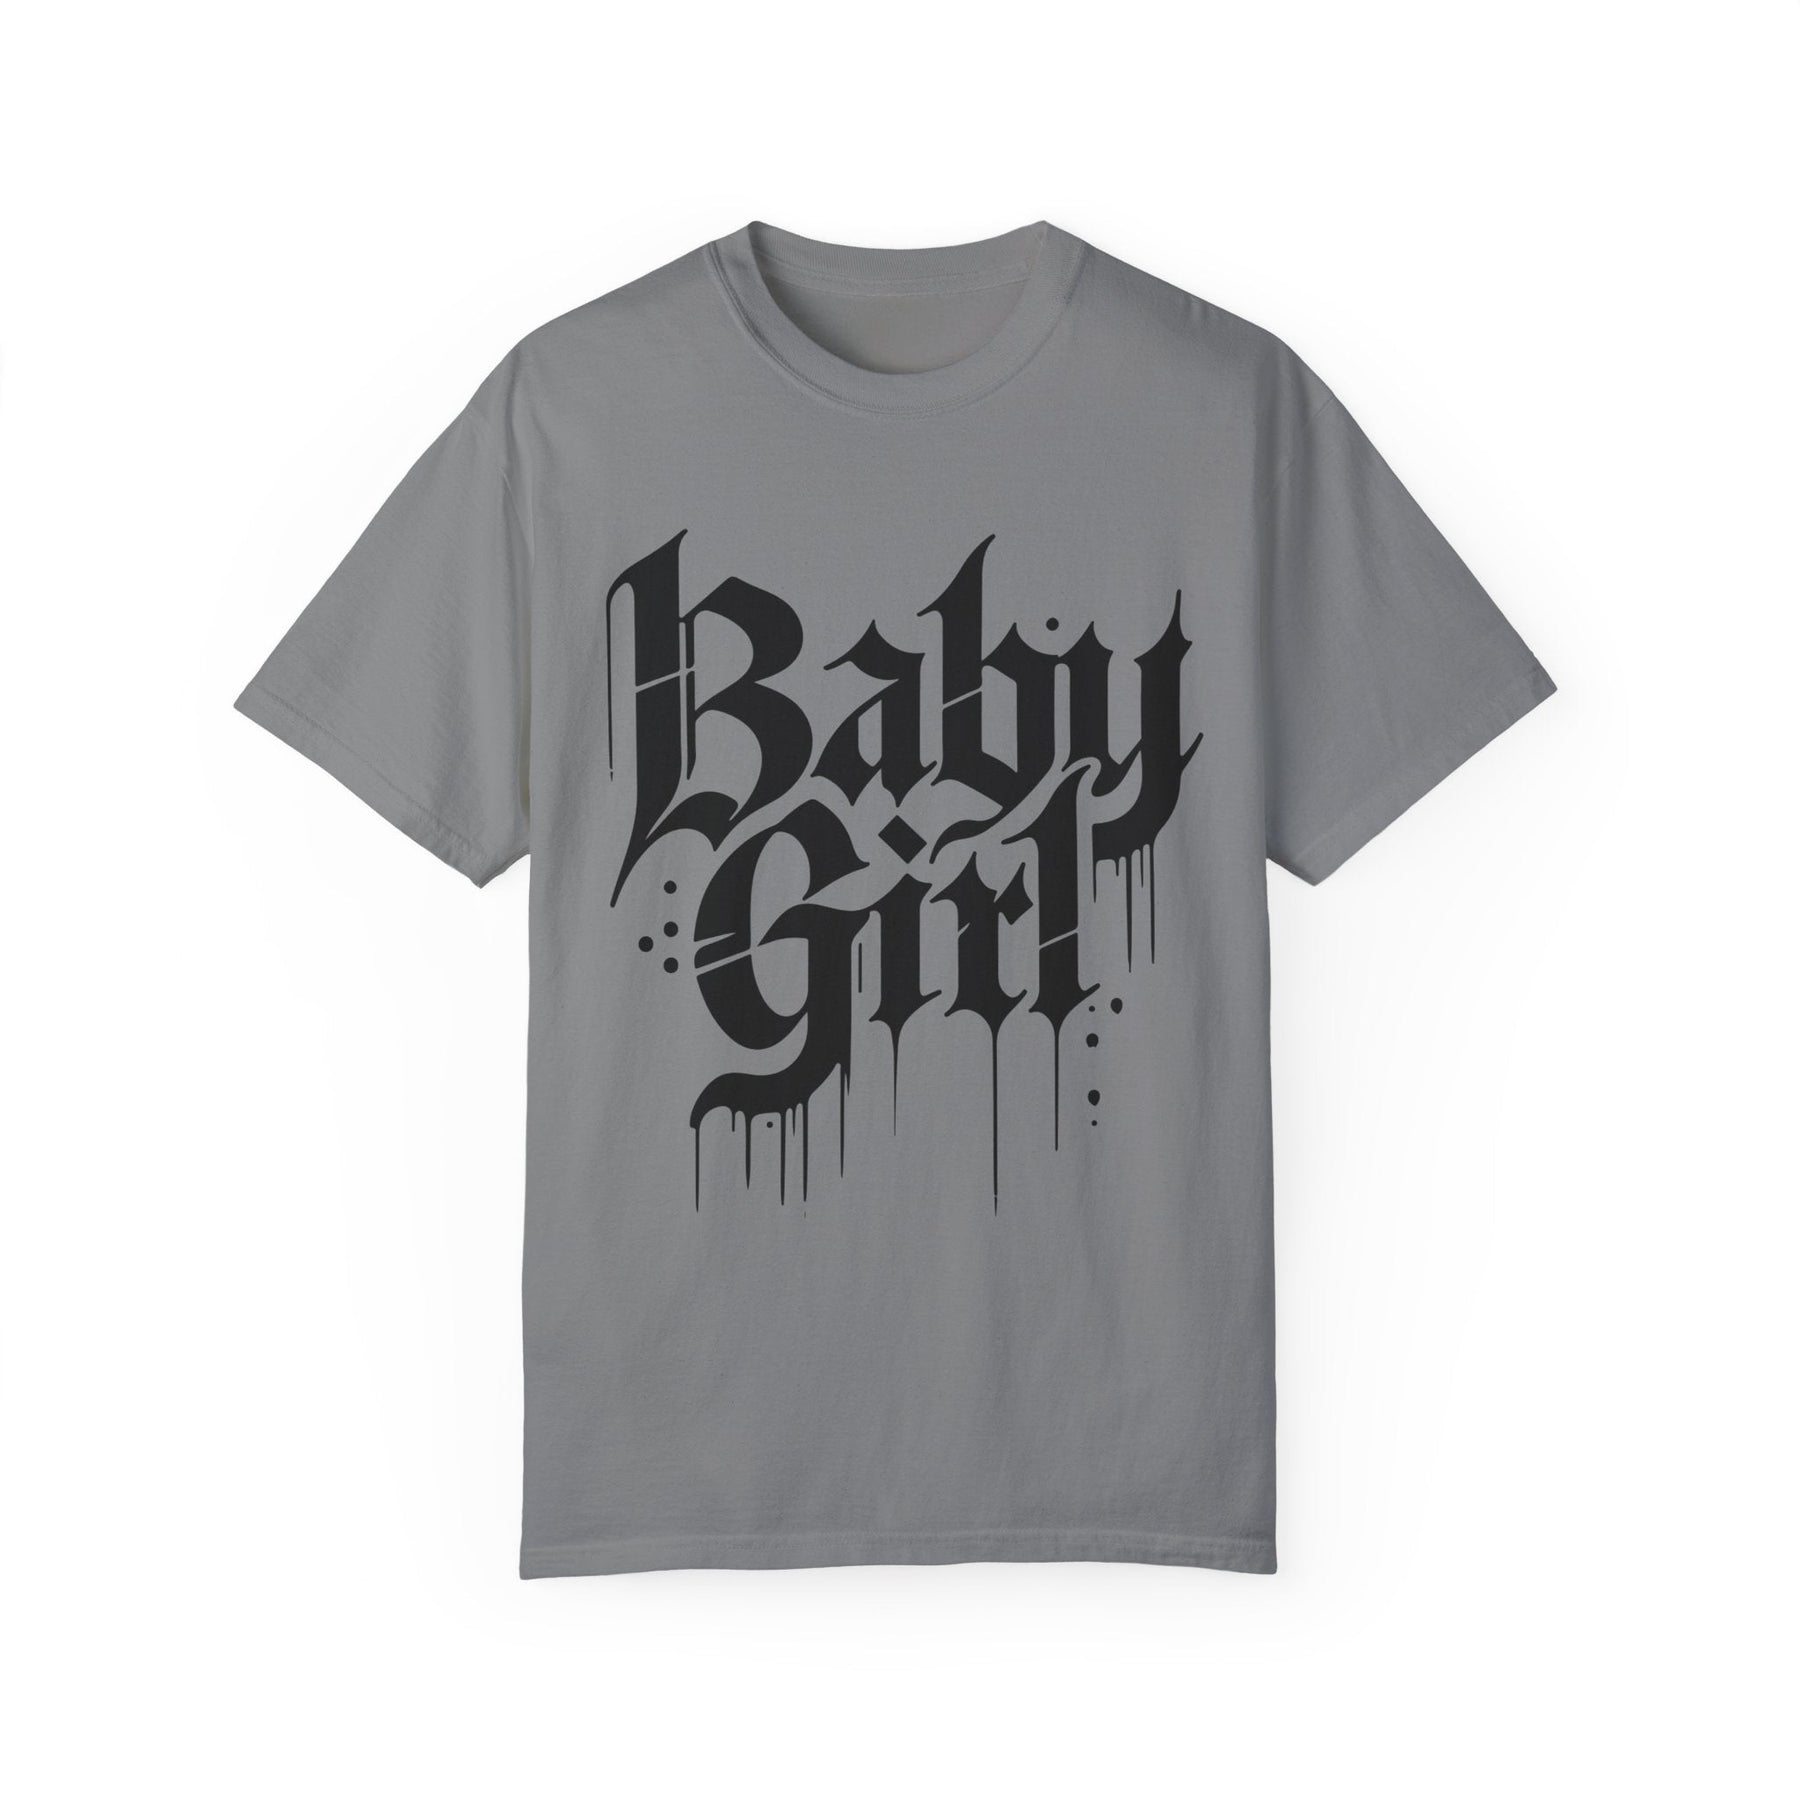 Baby Girl Comfort Tee - Goth Cloth Co.T - Shirt38584090732084560959